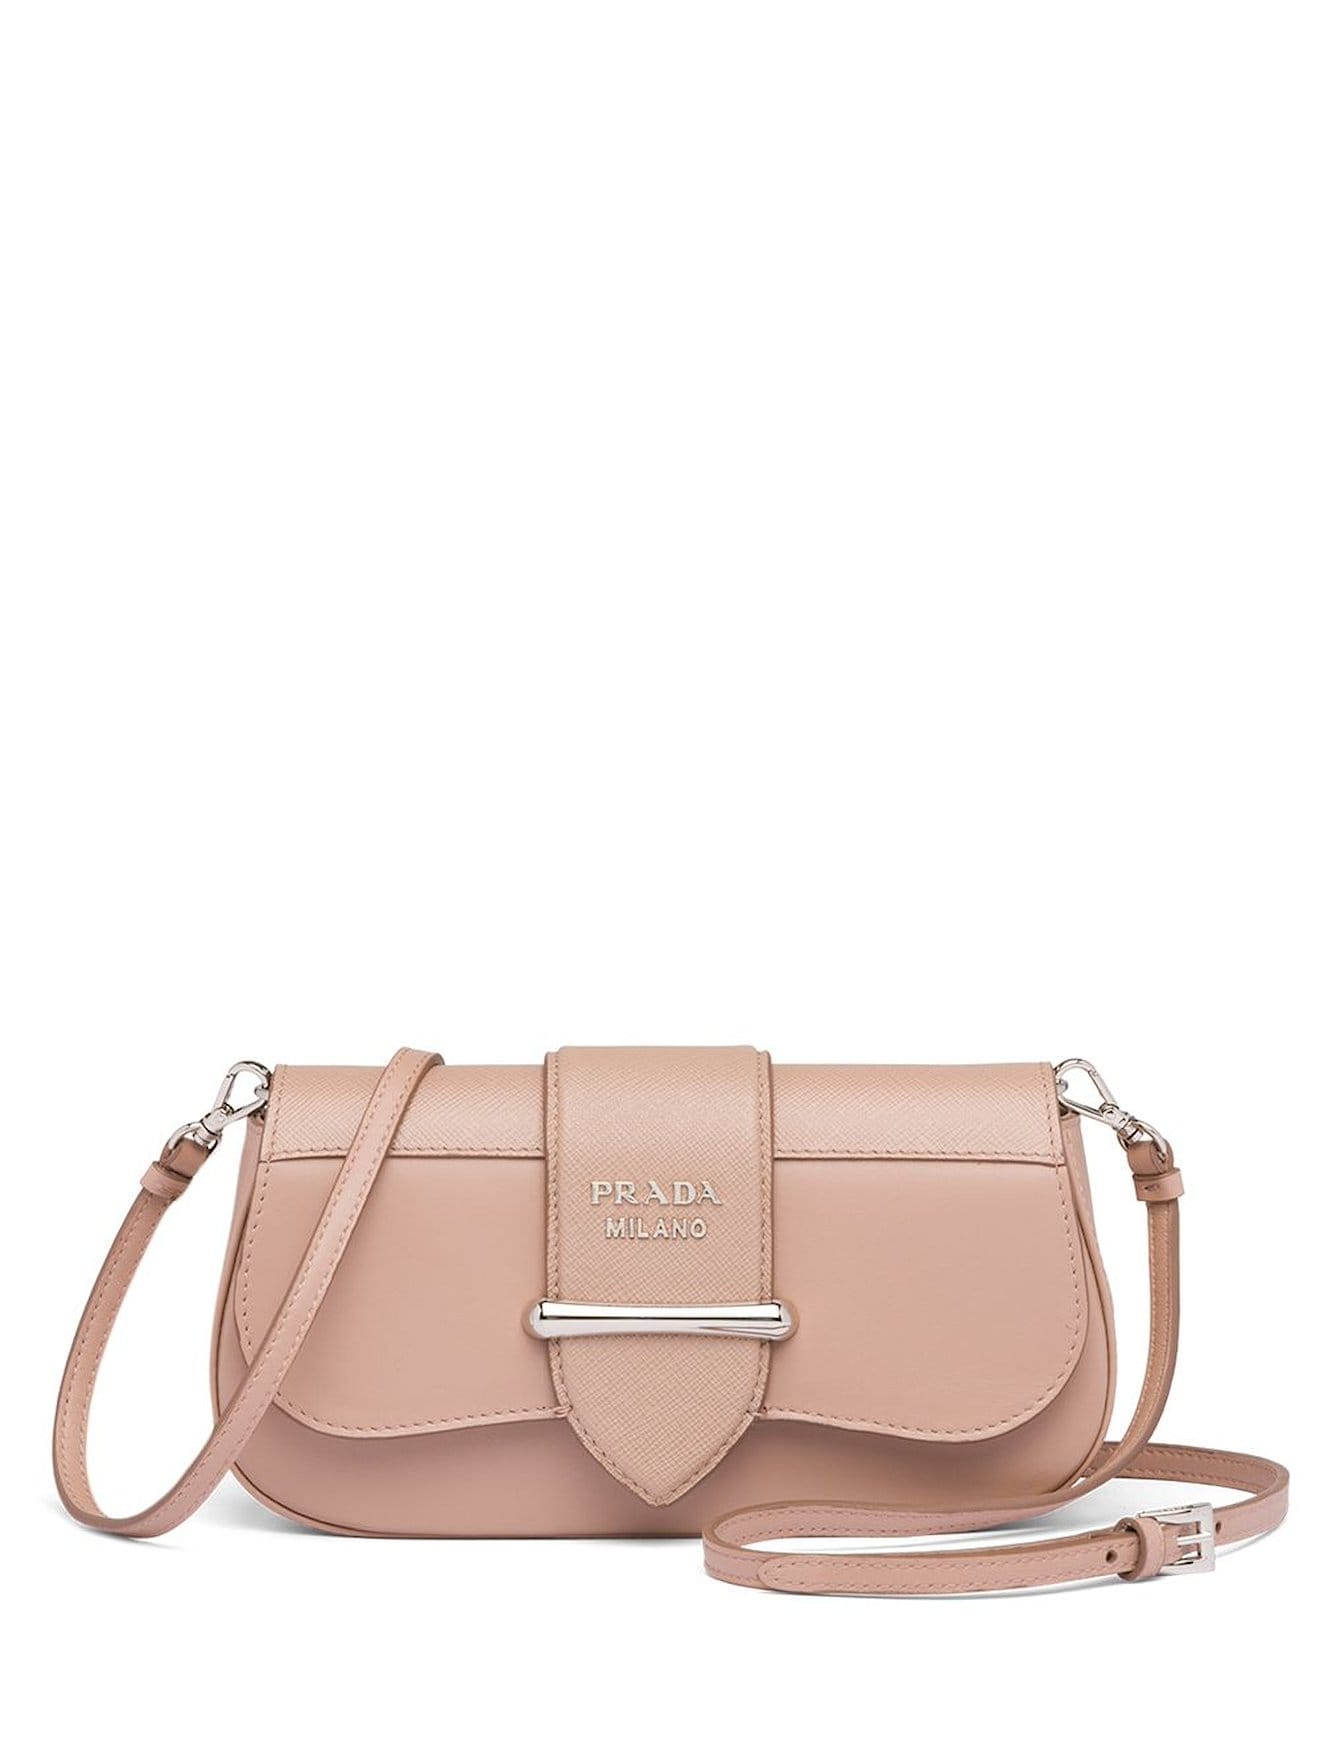 Prada - logo-plaque Mini Bag - Women - Leather/Fabric - Os - Pink